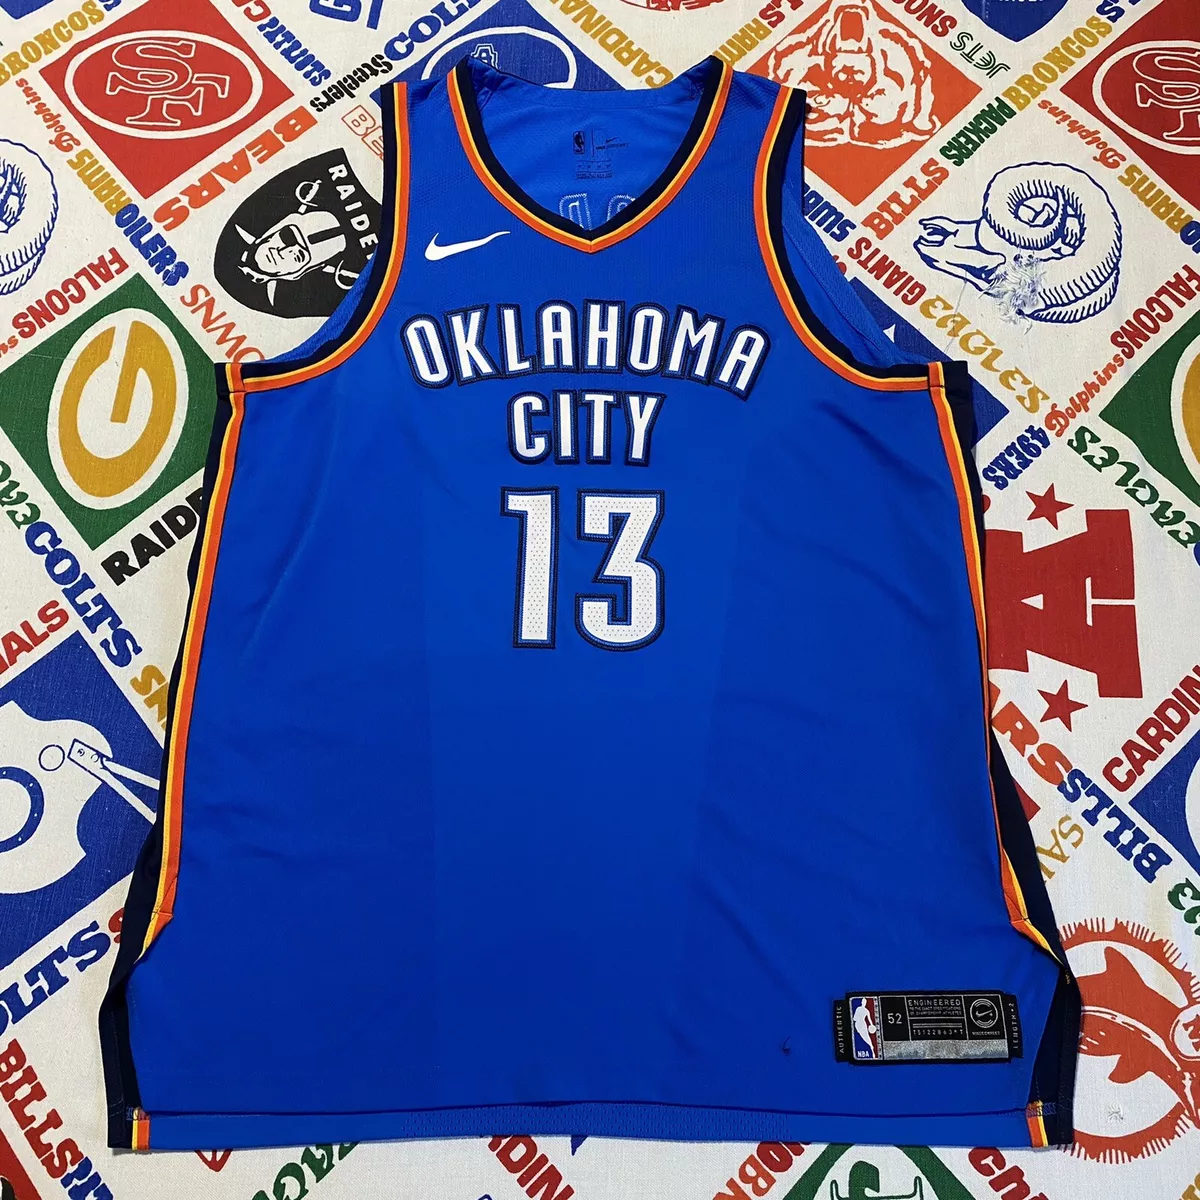 Paul George #13 Oklahoma City Thunder OKC Authentic Nike NBA 2019 Jersey  Size 52